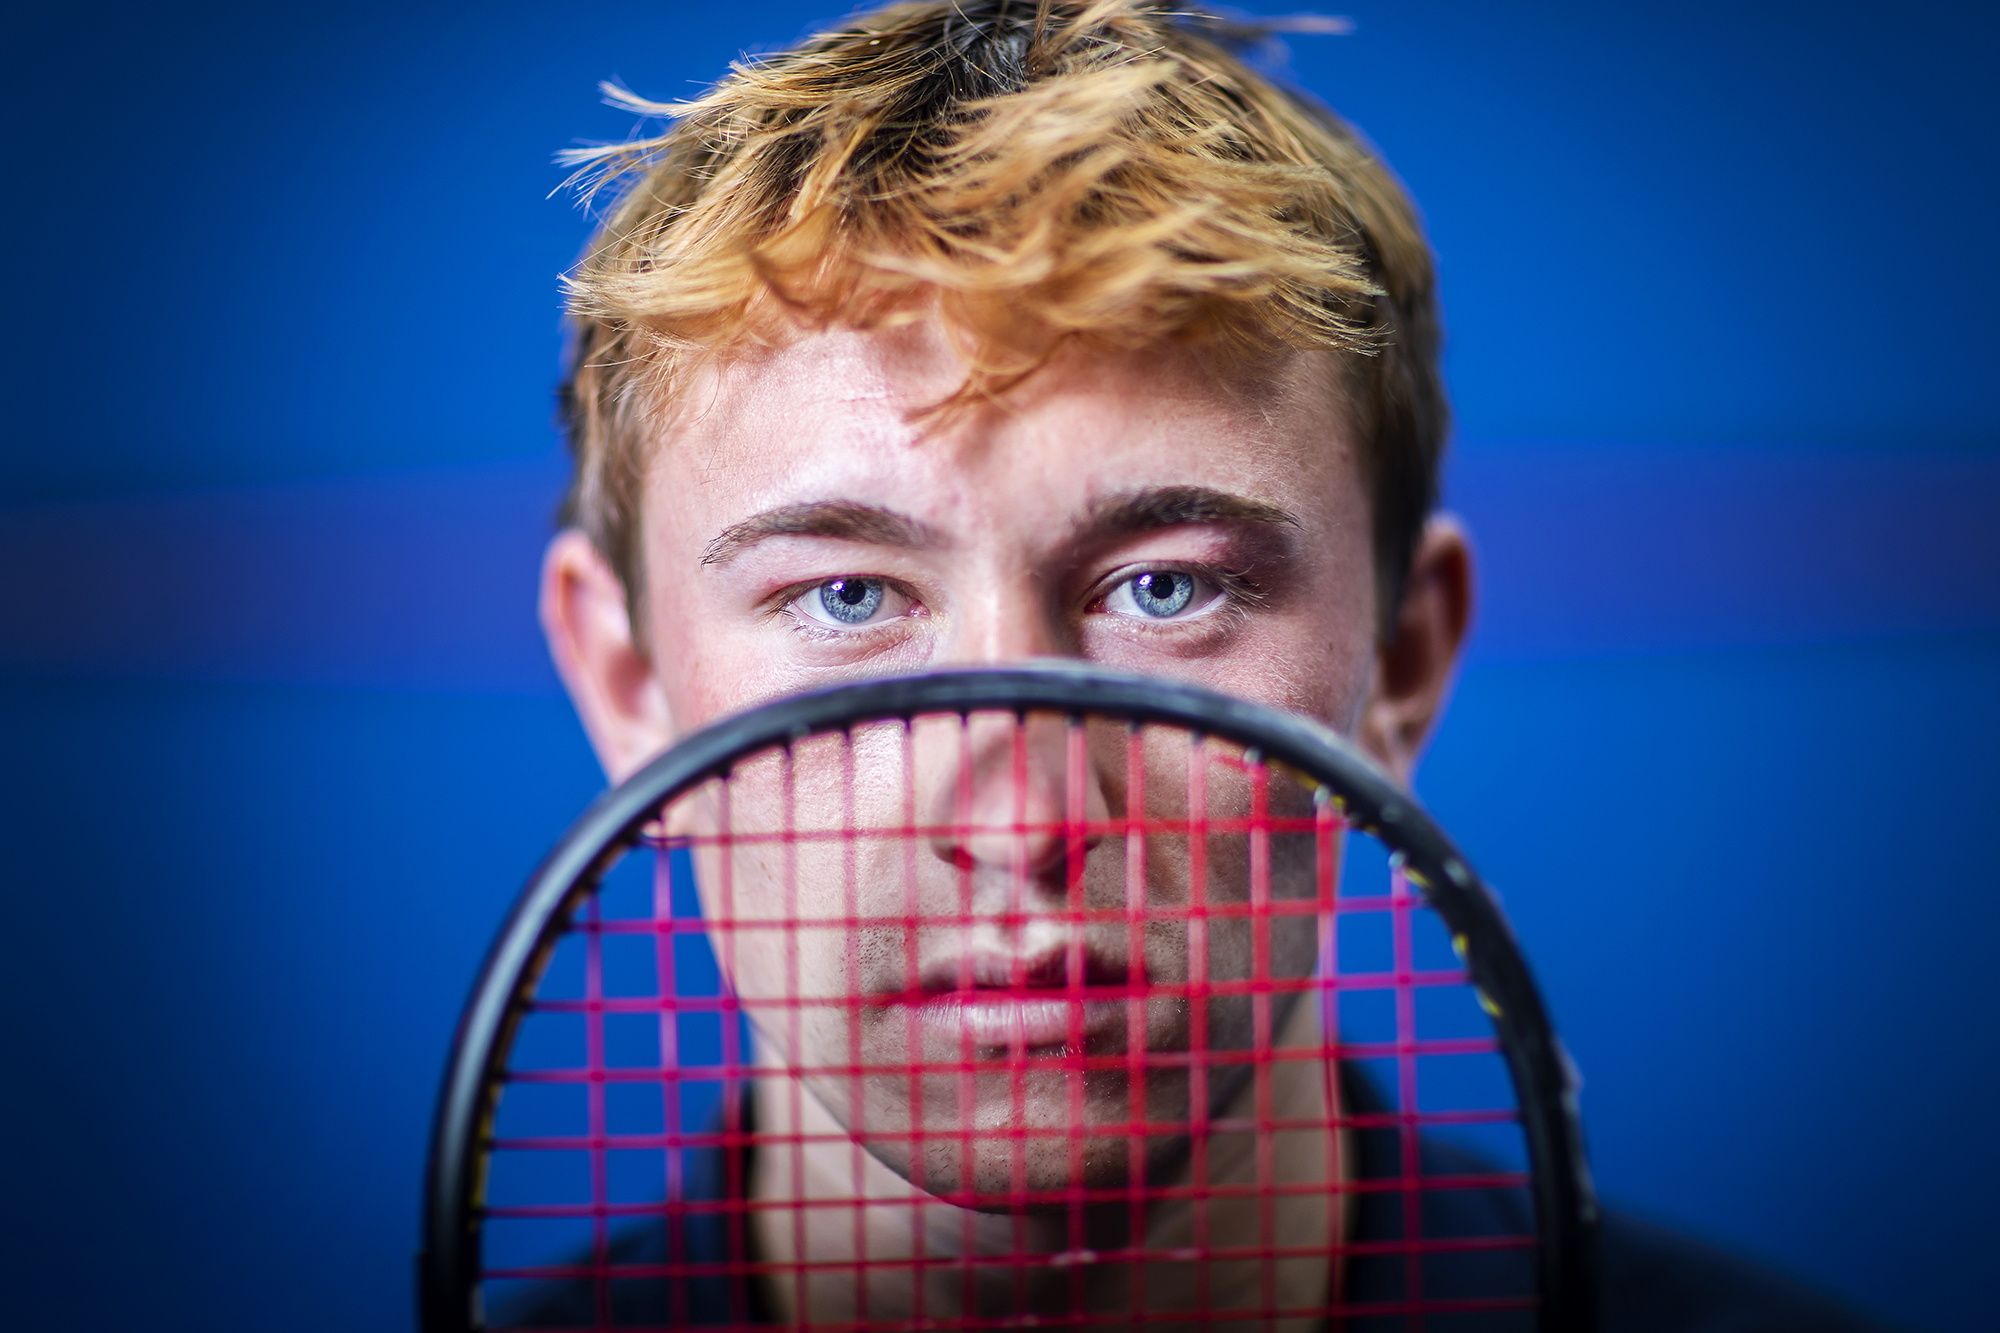 Andrew Douglas looks the the net on his squash racquet.